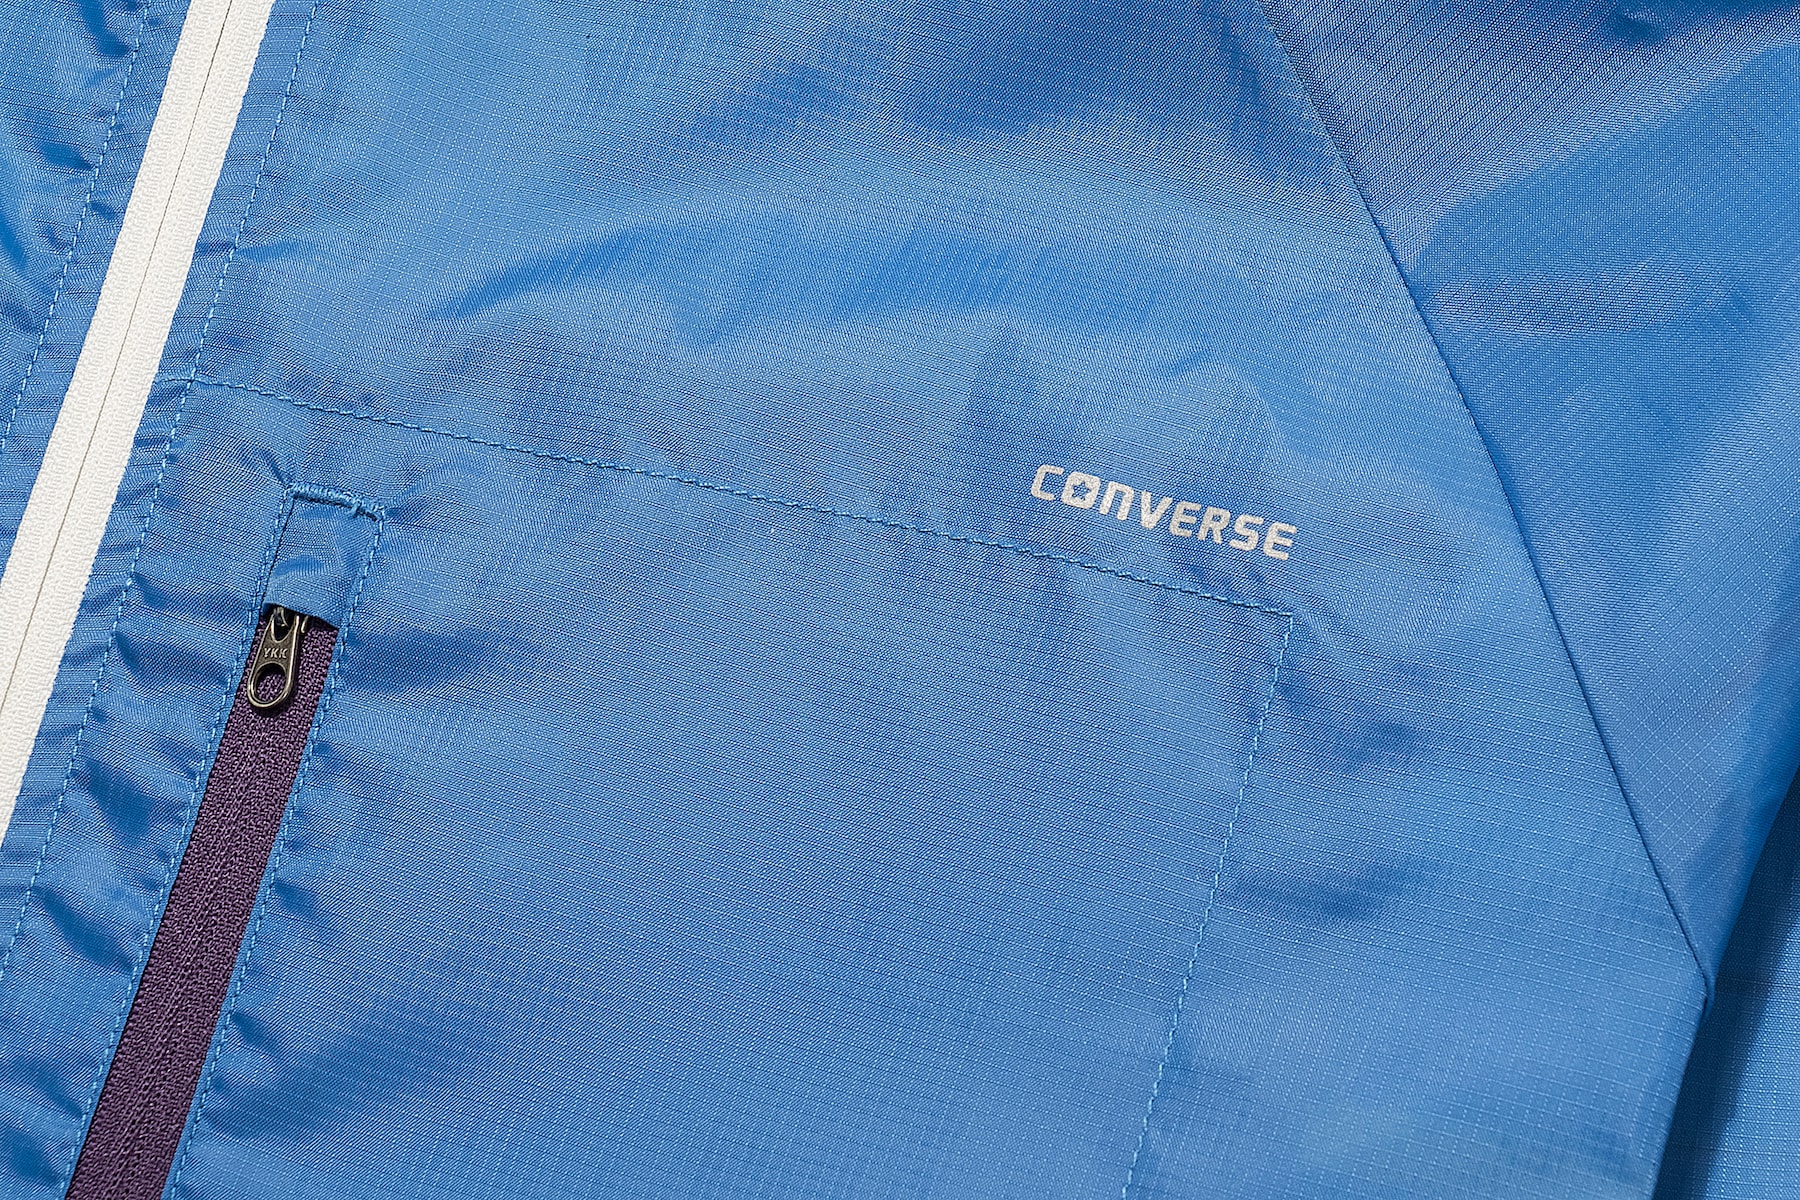 Converse x CLOT TEXMEX PACK “NEW-AGE-ETHNIC”